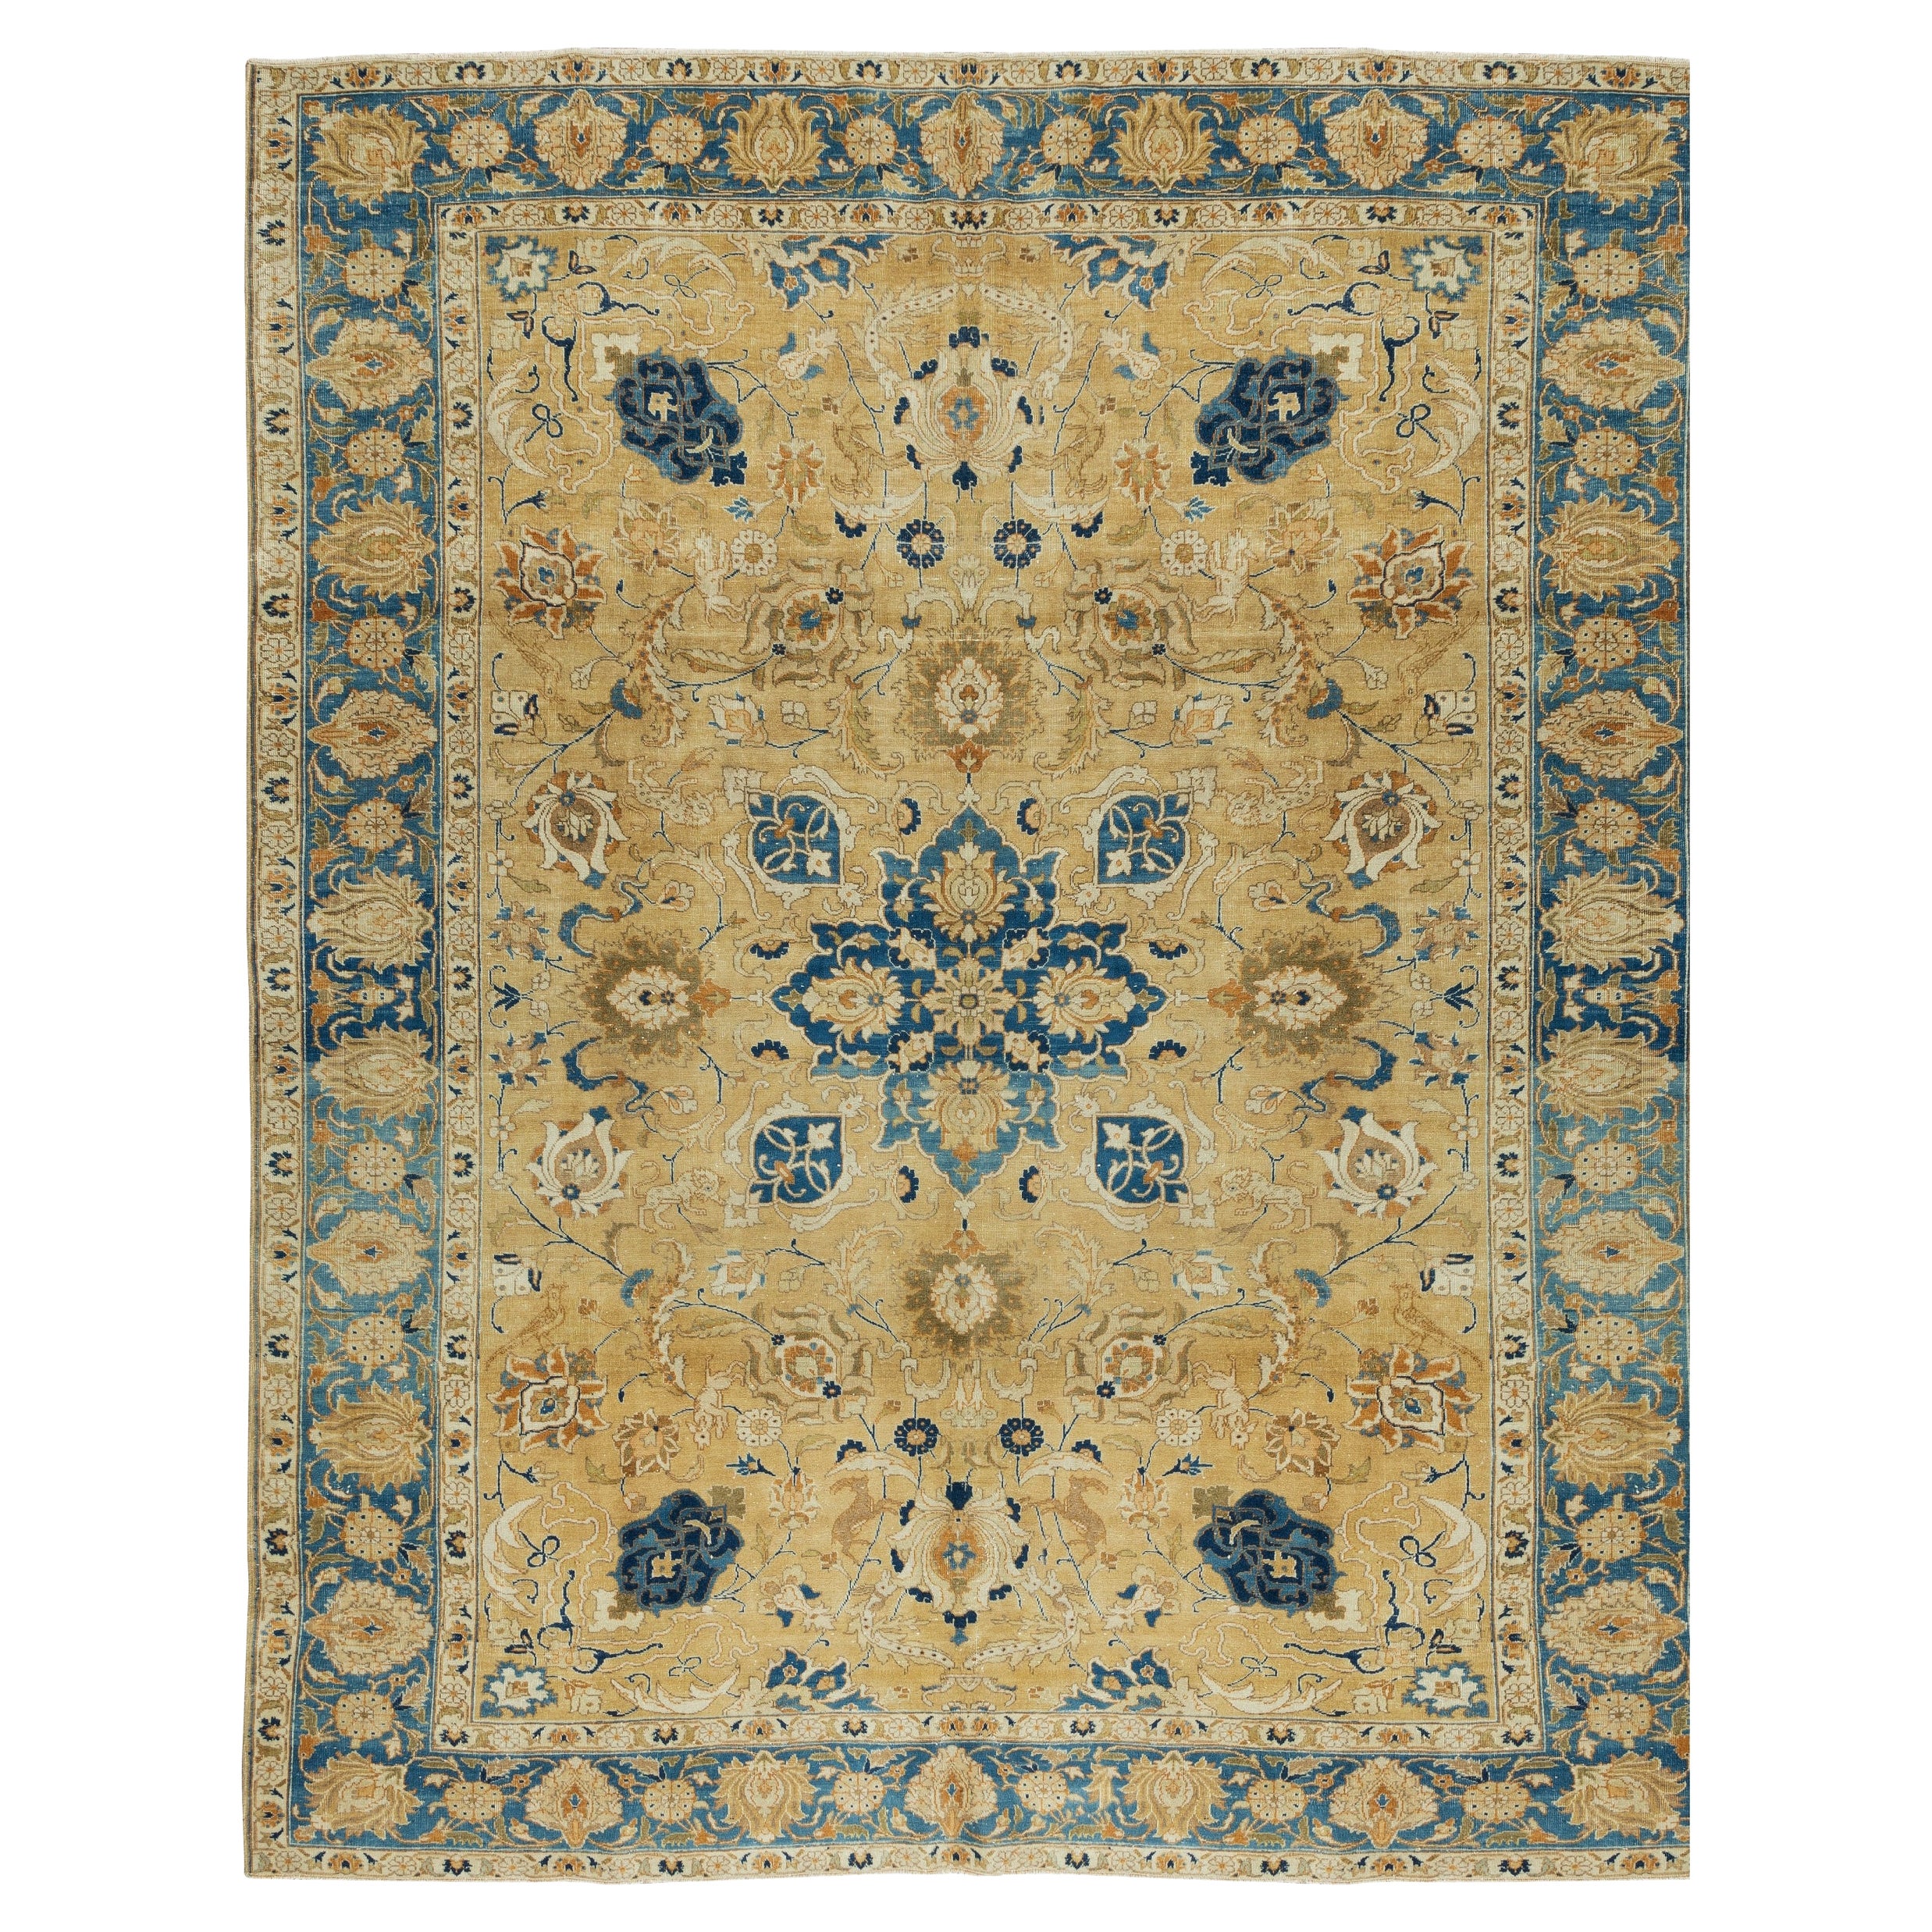 8x11 Ft Modern Handmade Area Rug in Beige & Blue, Floral Pattern Turkish Carpet